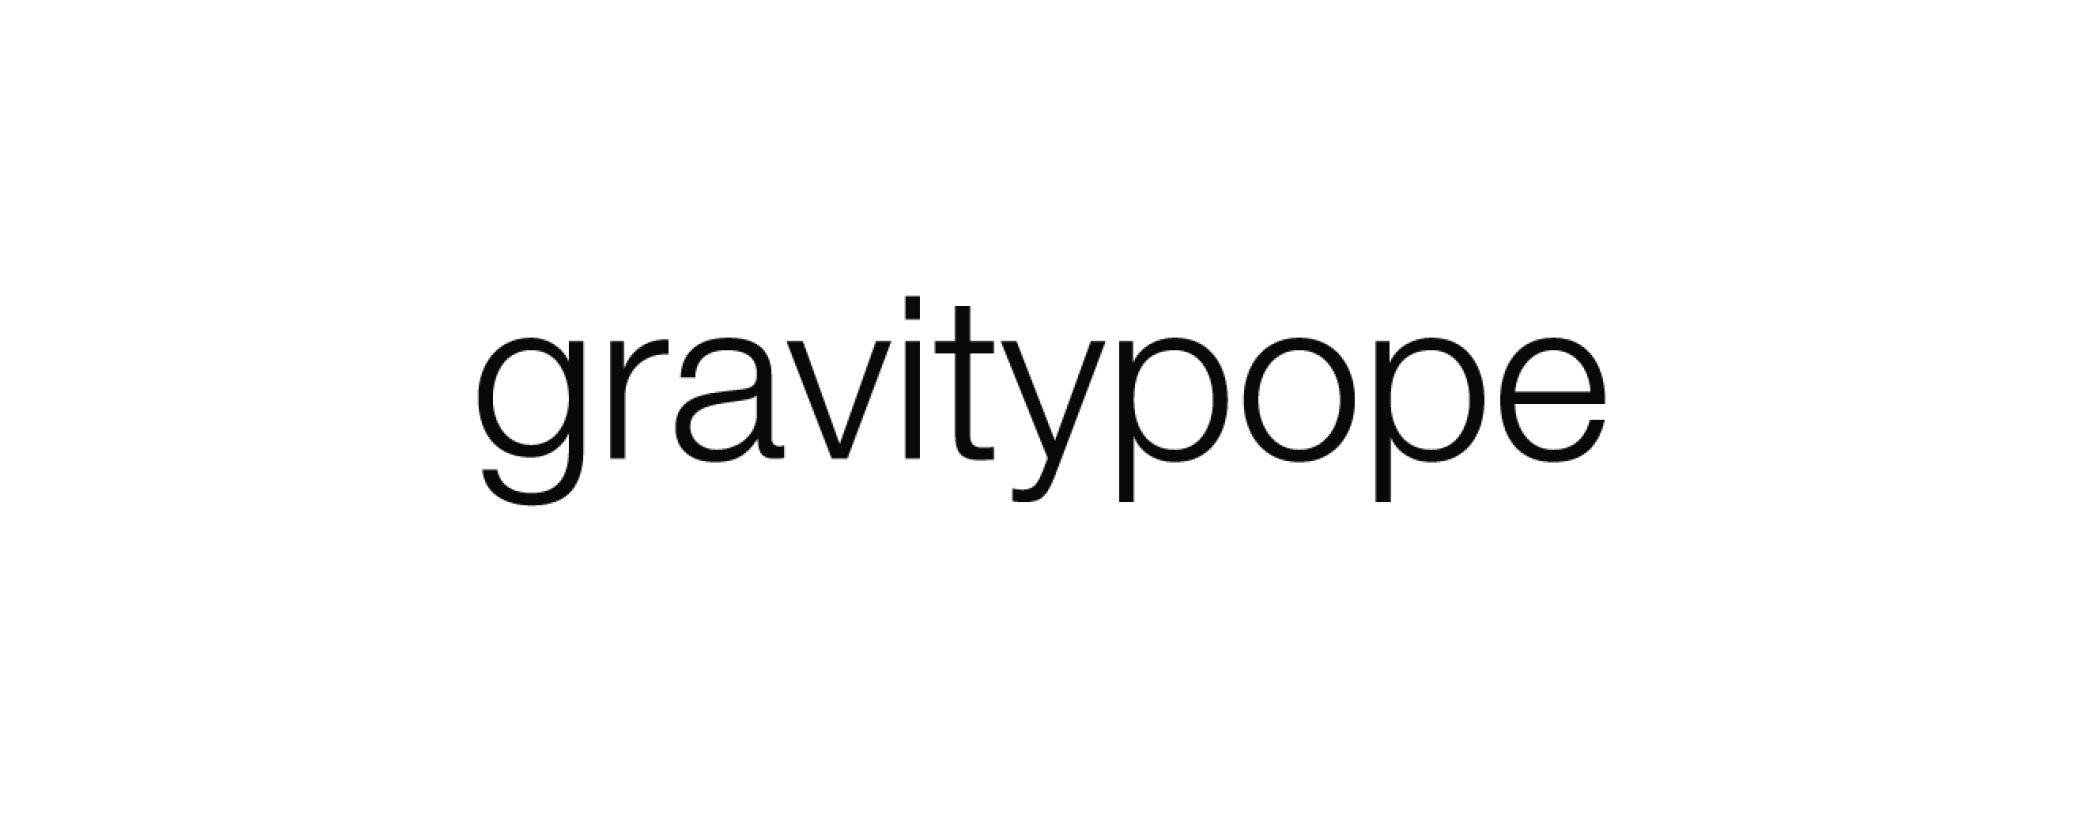 gravity pope.jpg